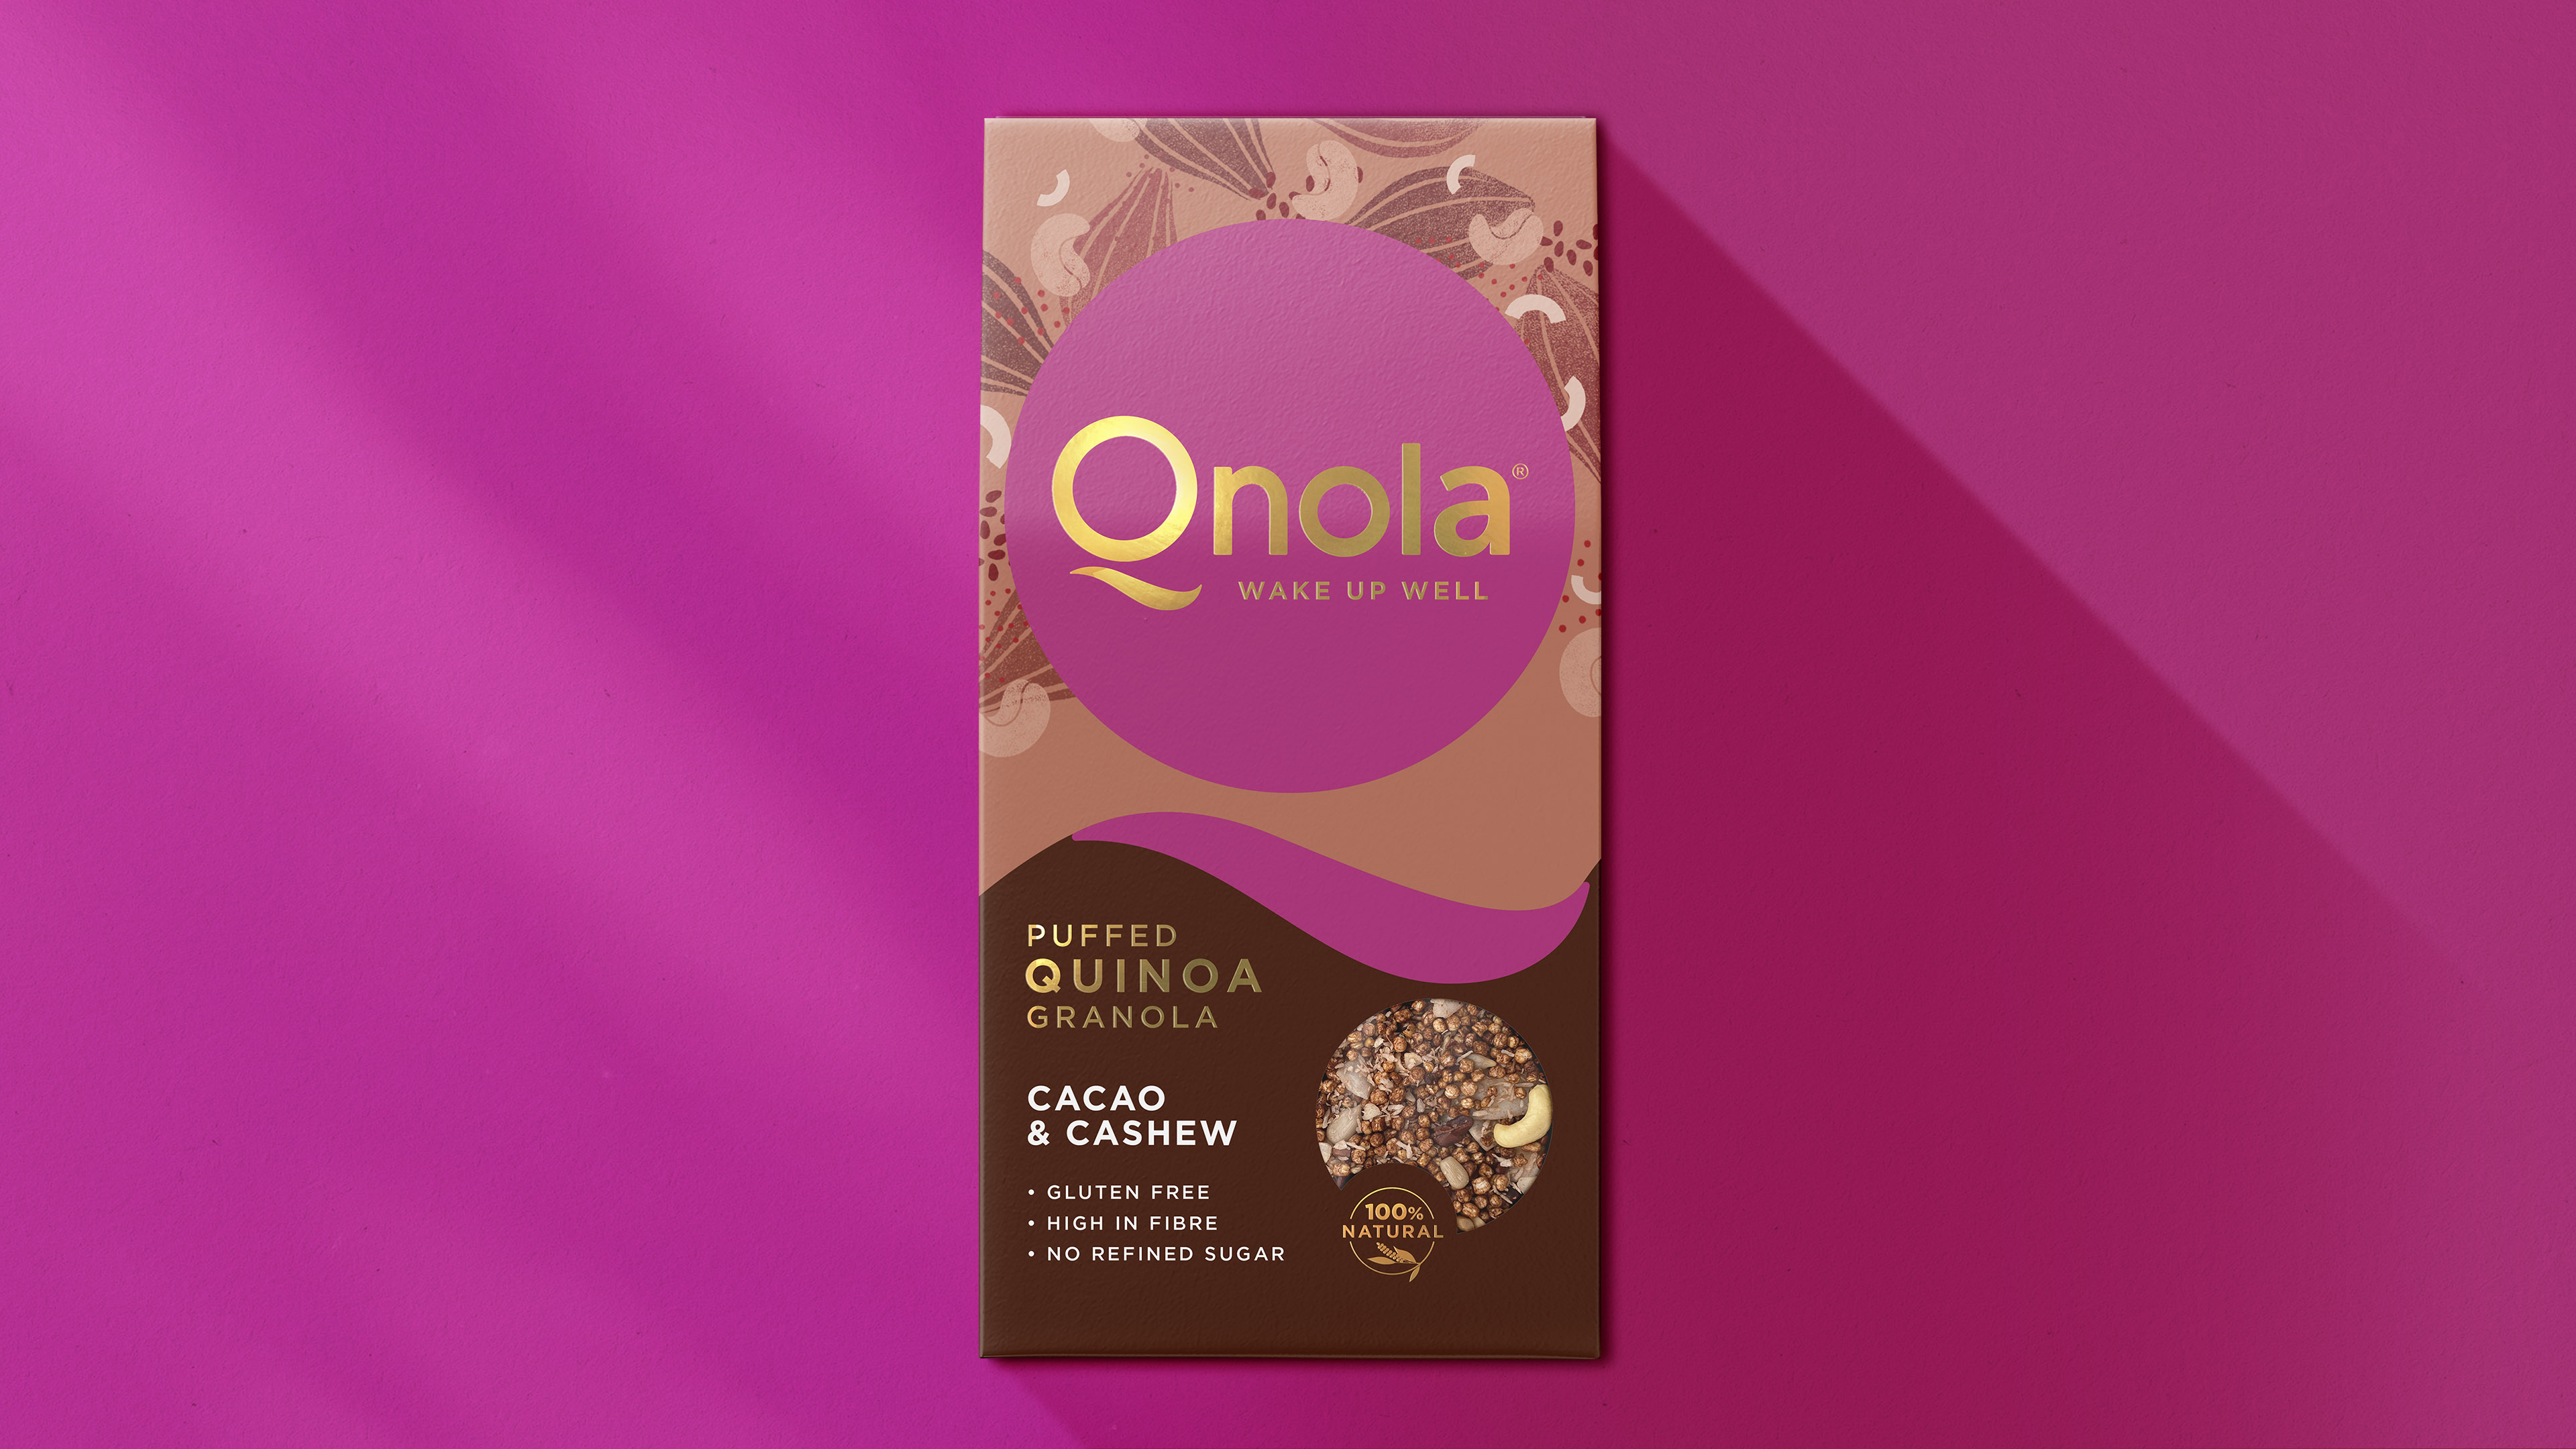 Qnola’s New Identity by Sunhouse Wakes Up the Breakfast Category